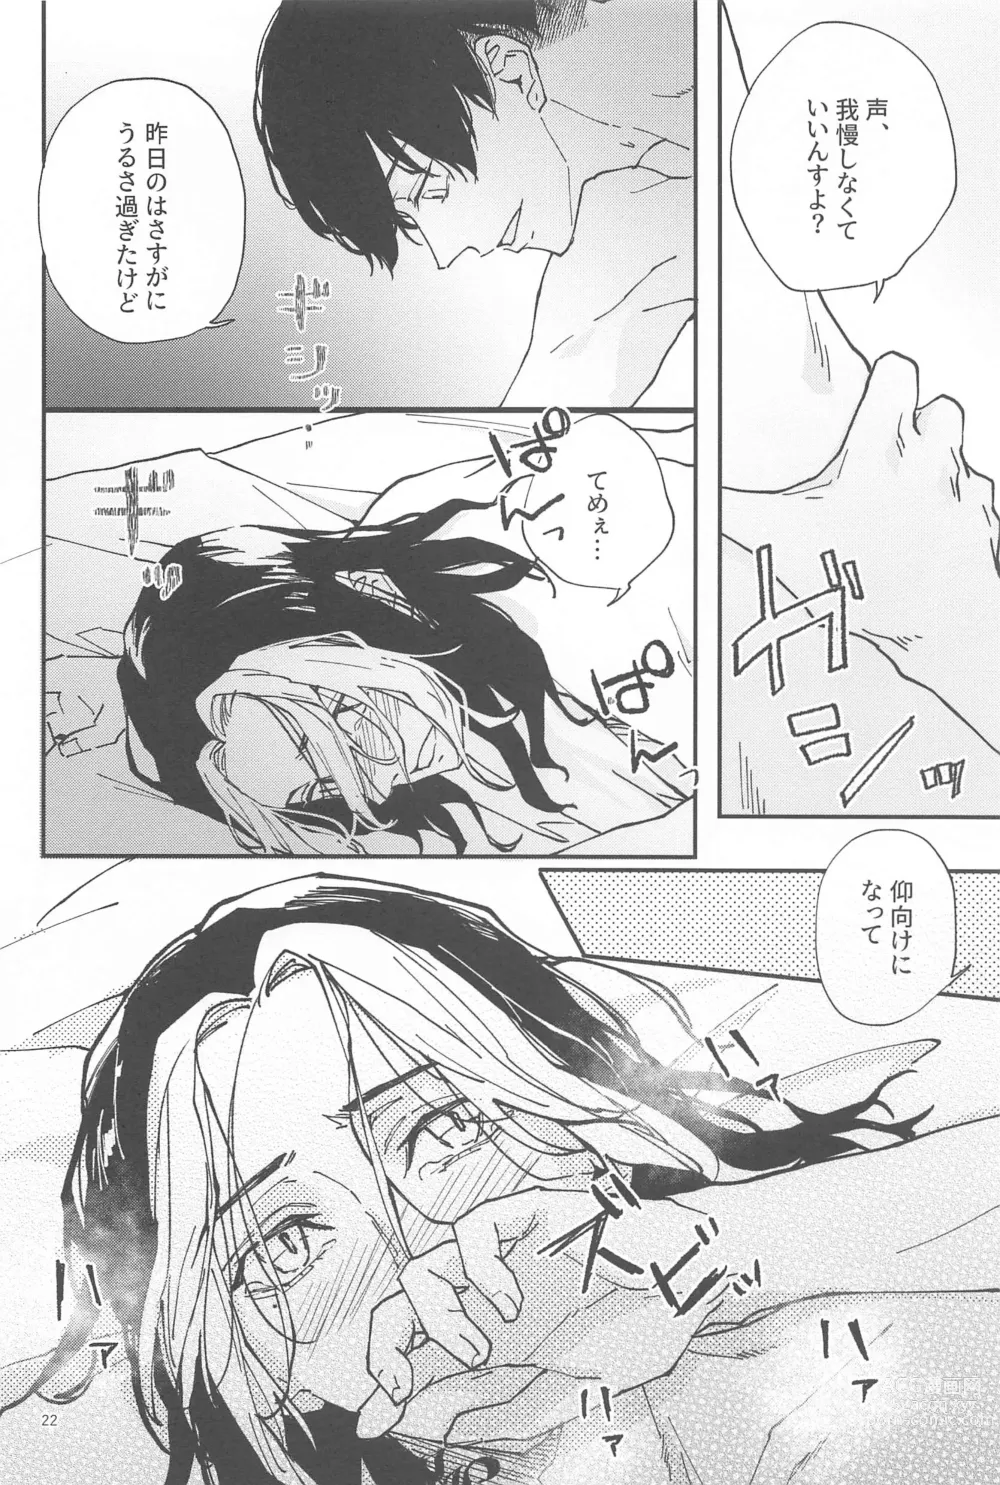 Page 21 of doujinshi Reverse Kisei Jijitsu  no Ryouomoi